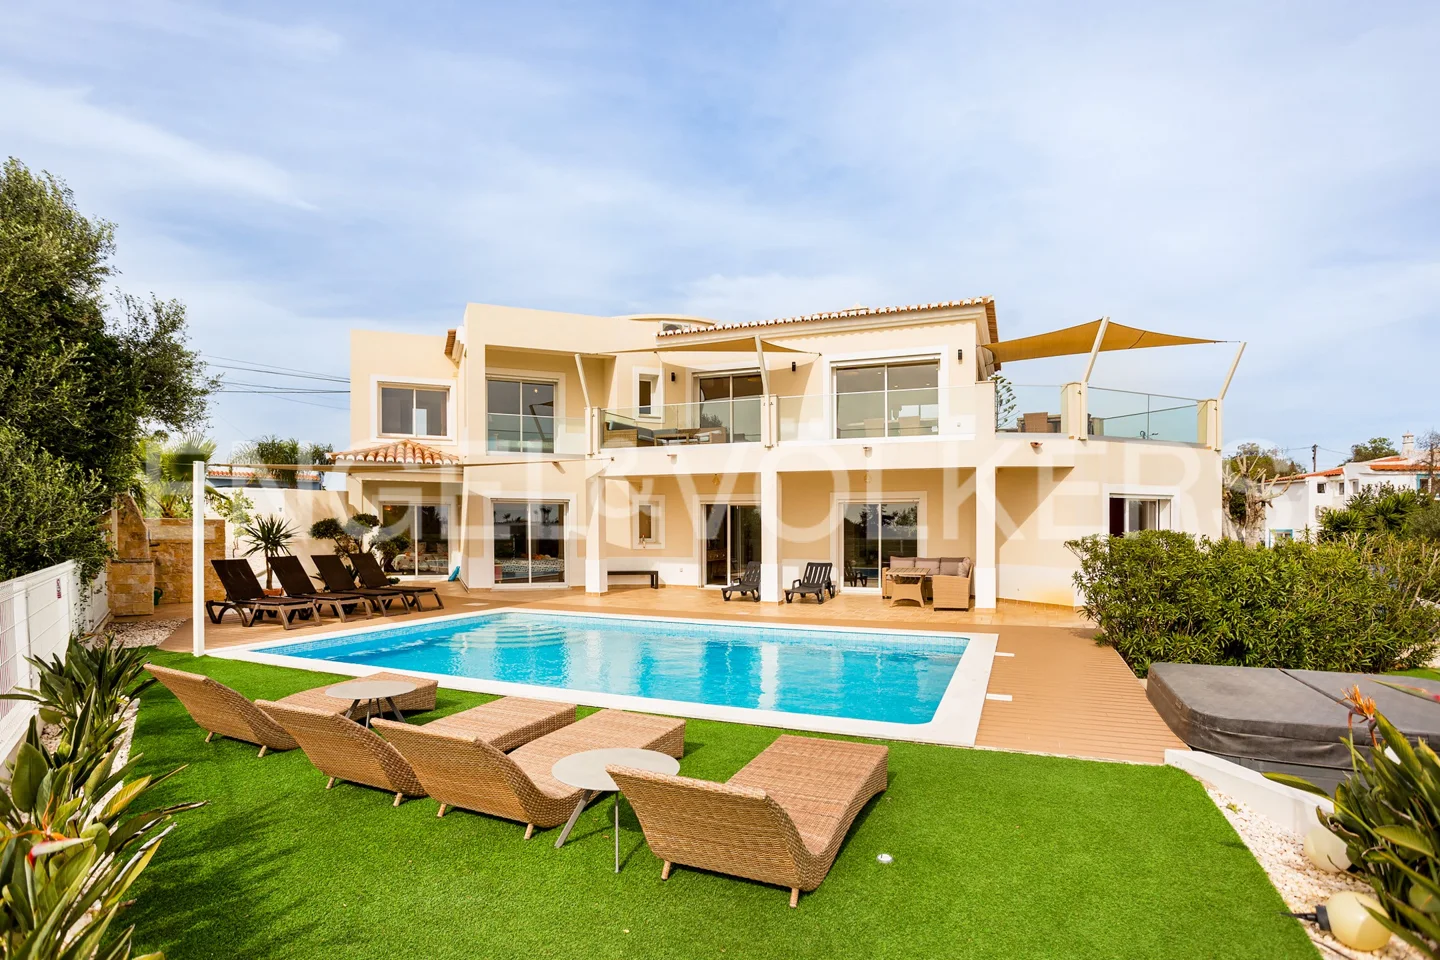 Stunning 4-bedroom villa with sea views